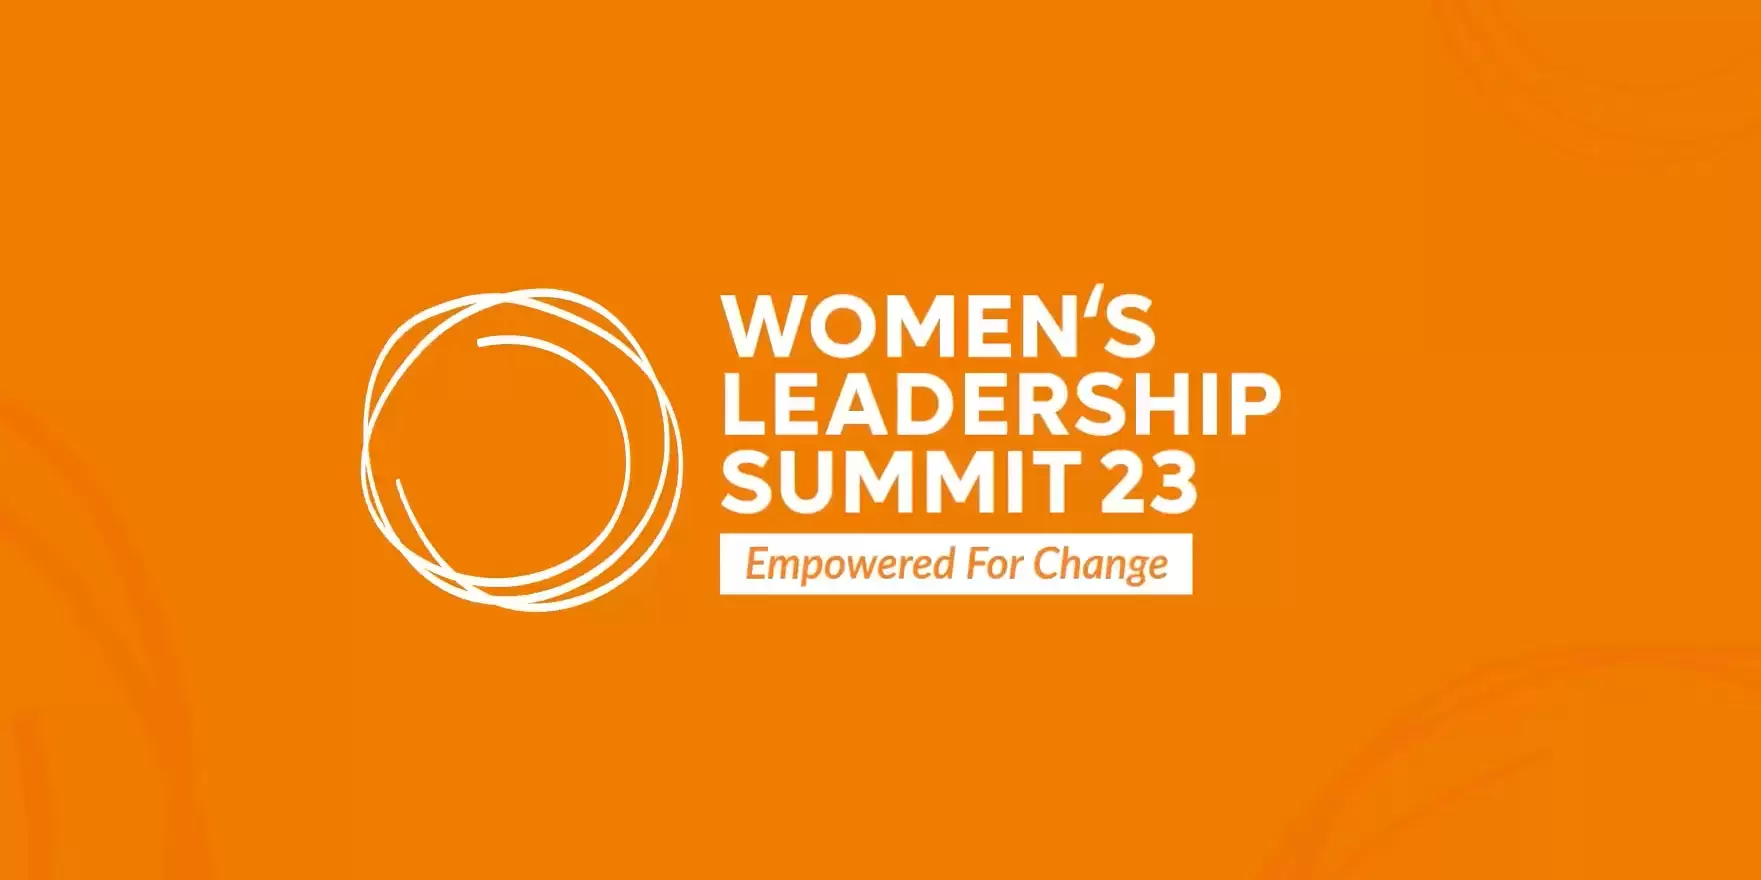 Register for Womens' Leadership Summit 23!